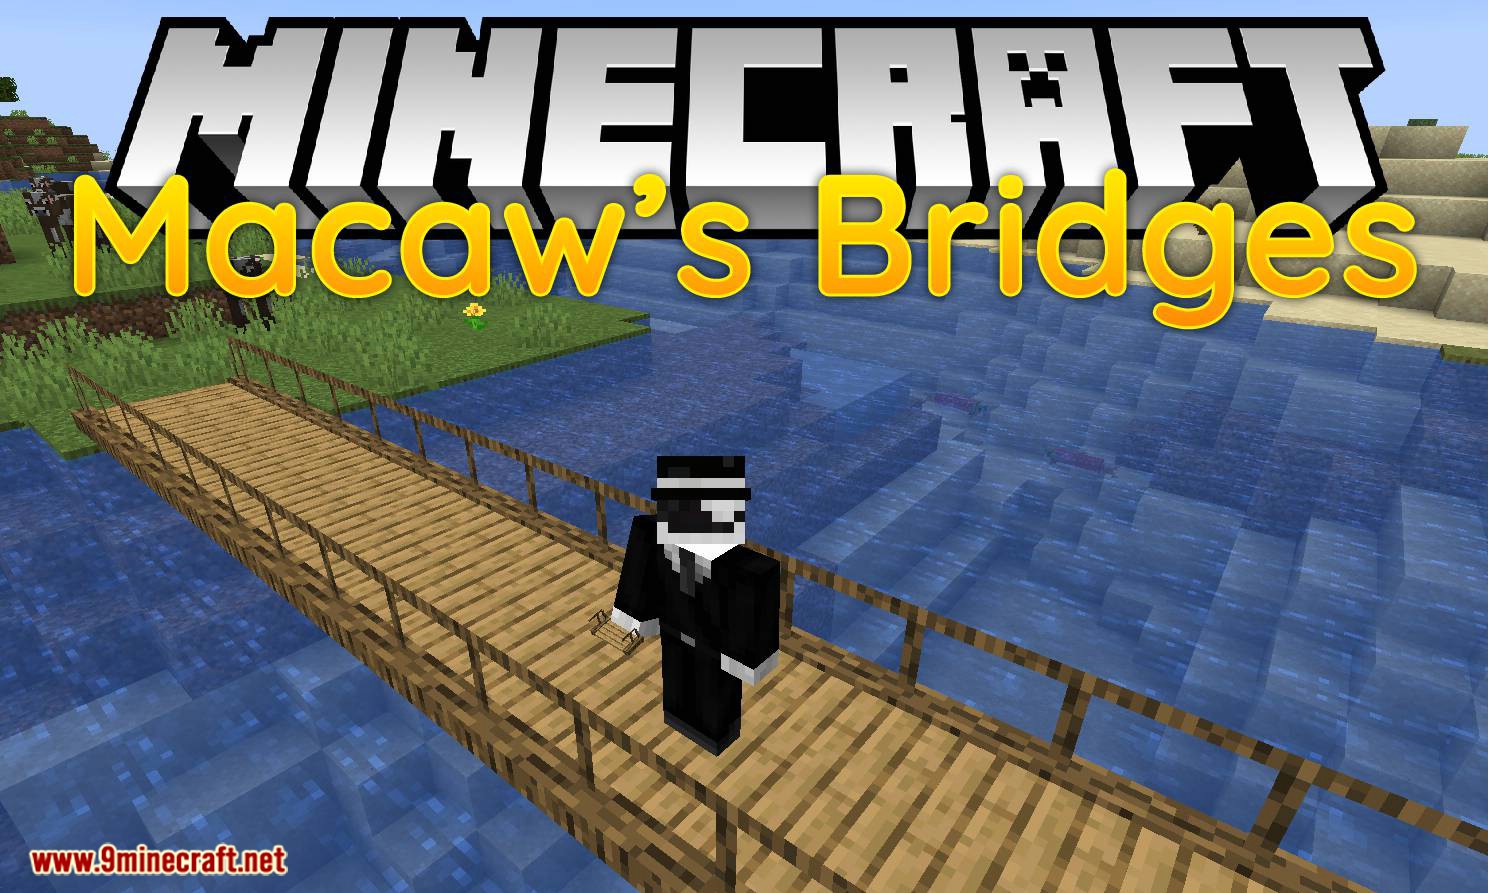 Macaw_s Bridges mod for minecraft logo